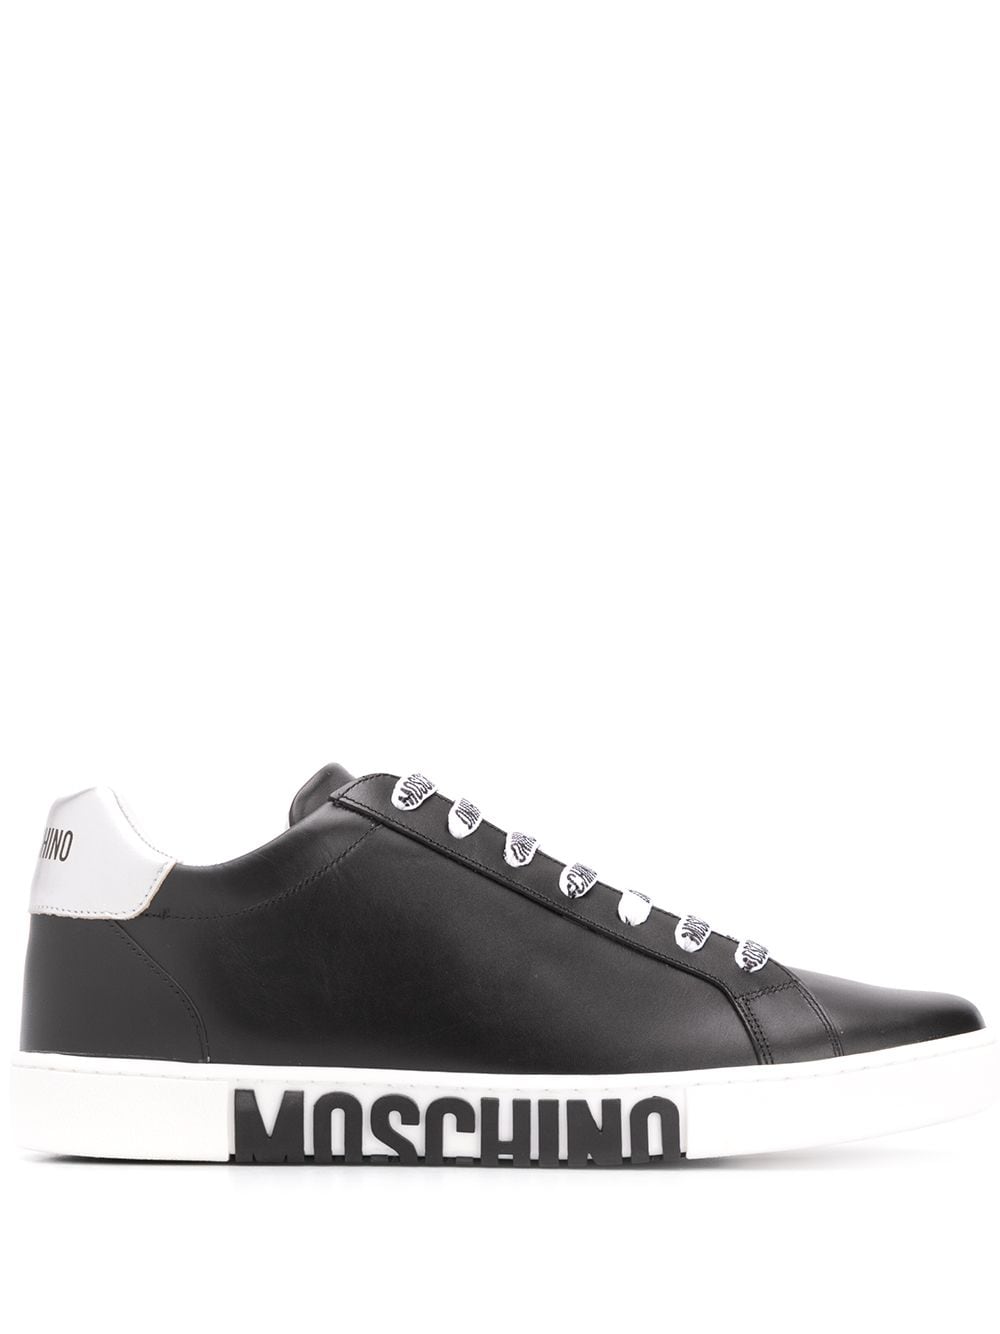 Moschino logo leather sneakers - Black von Moschino